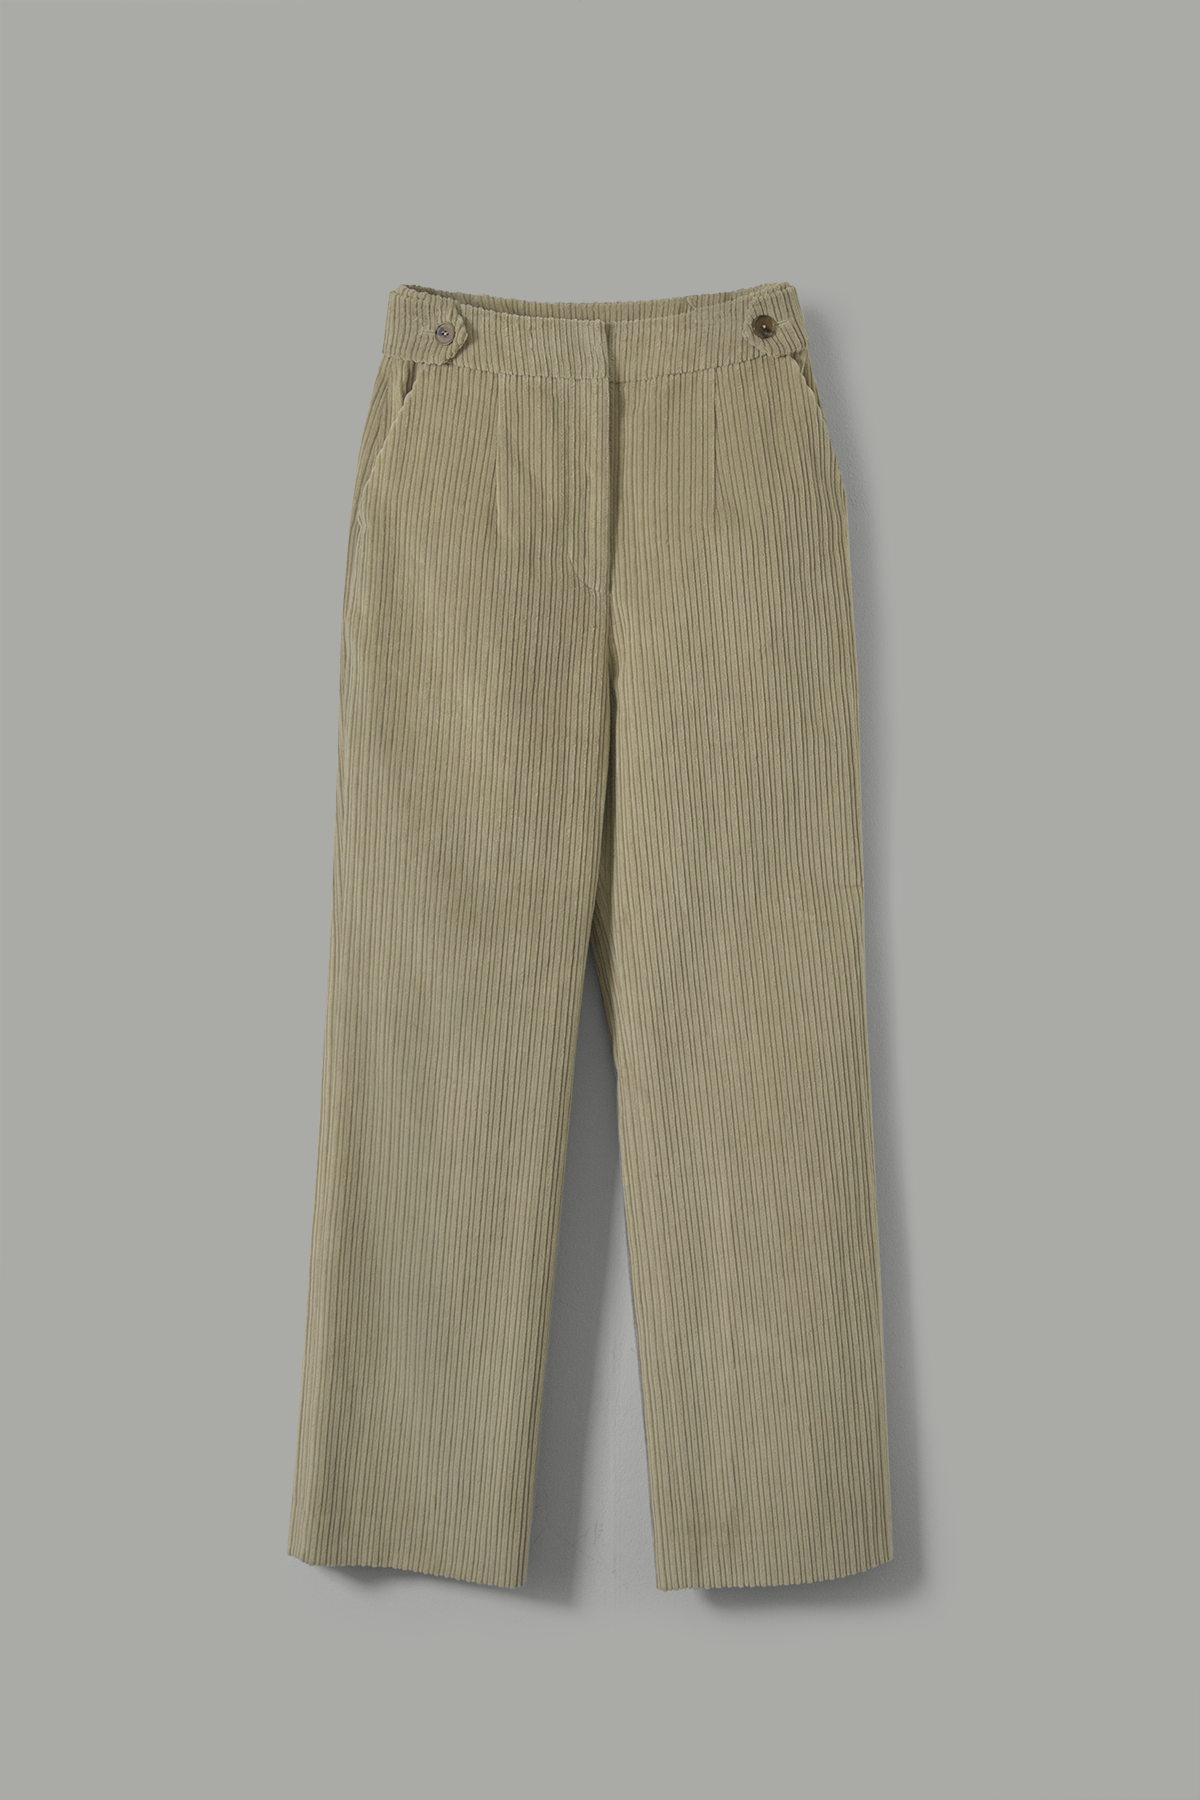 Abbey Corduroy Trousers (2 colors)